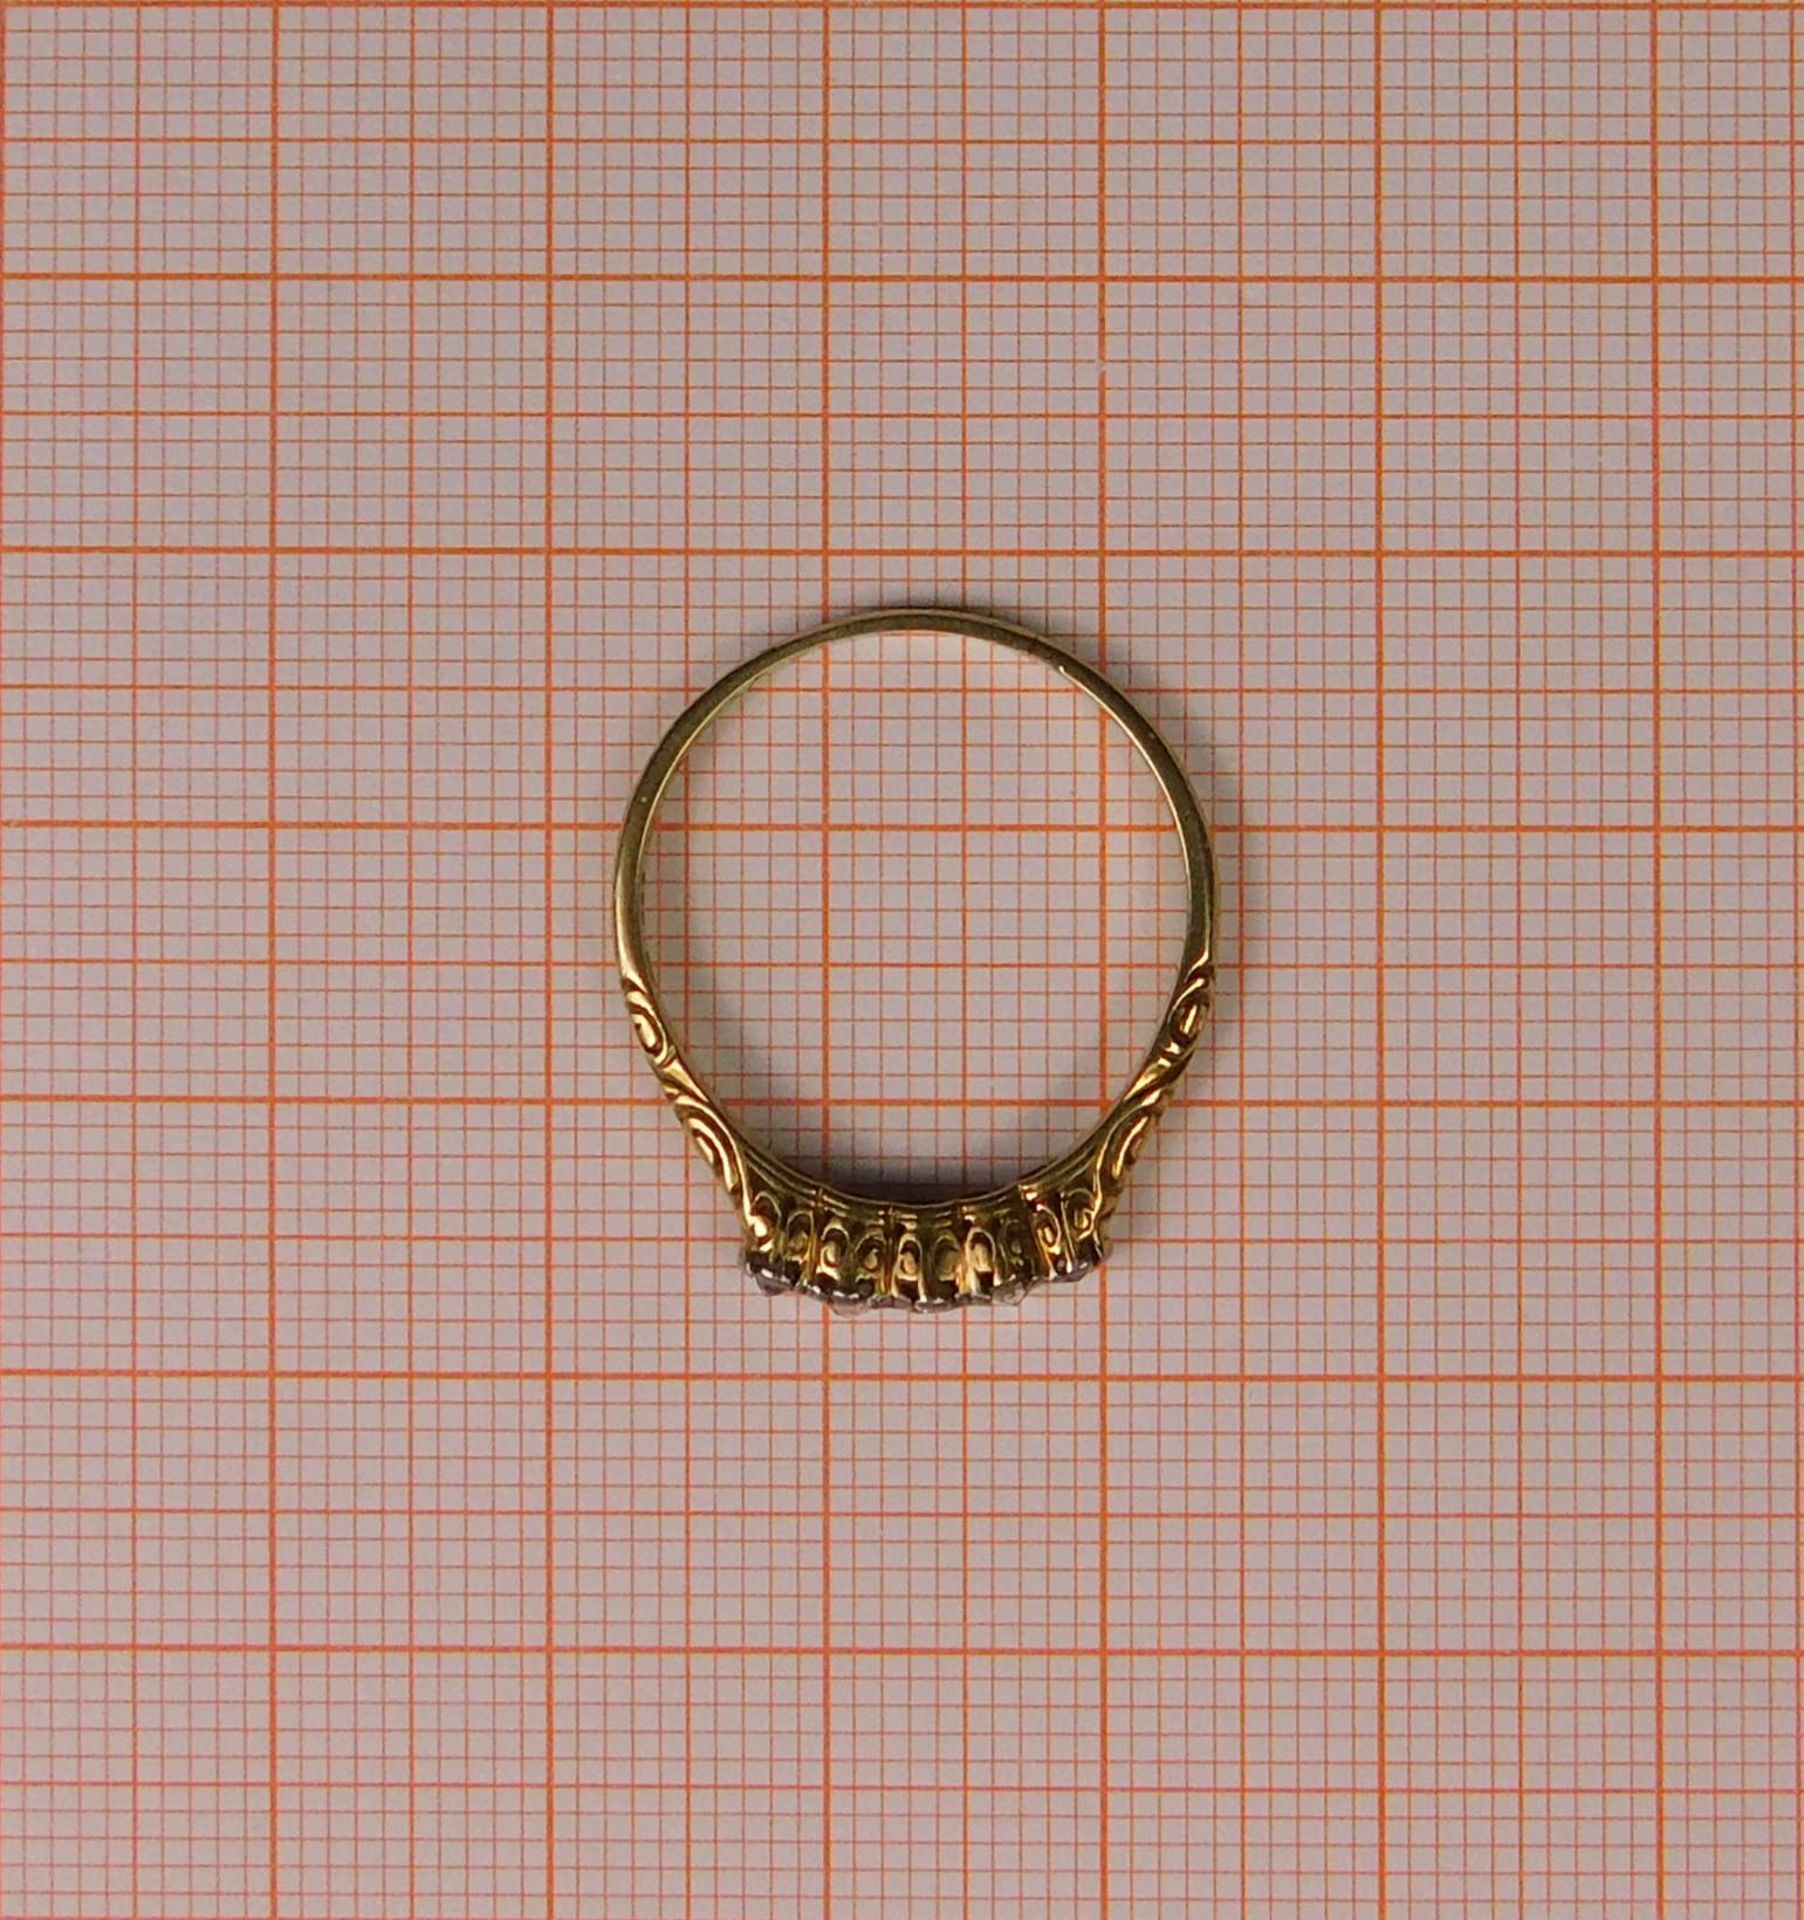 Historischer Diamantrosen-Ring. Gold 585. 18./19. Jahrhundert? - Image 10 of 12